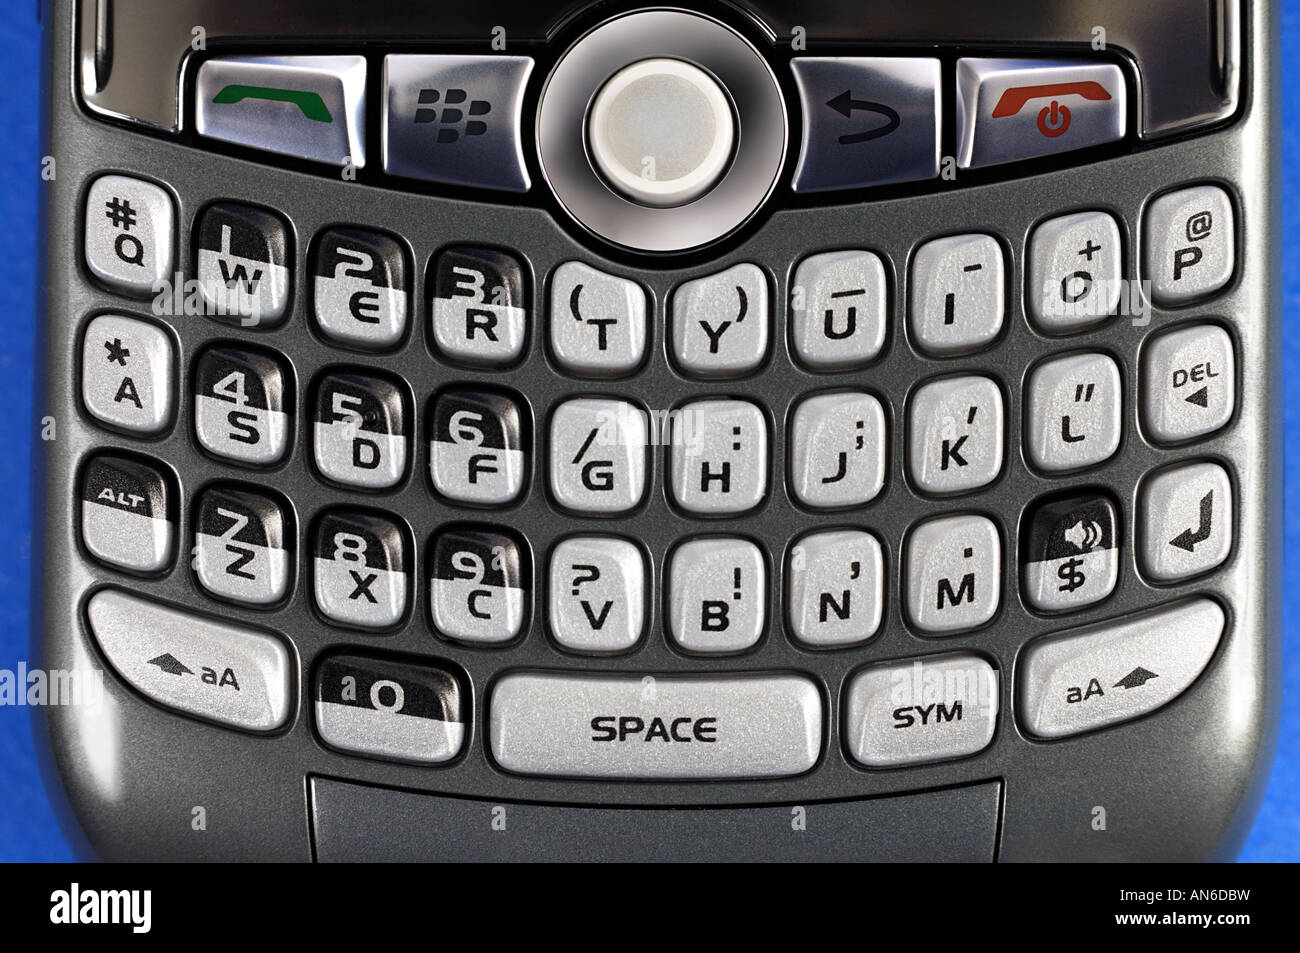 Smartphone BlackBerry Curve 8310 clavier close up Banque D'Images